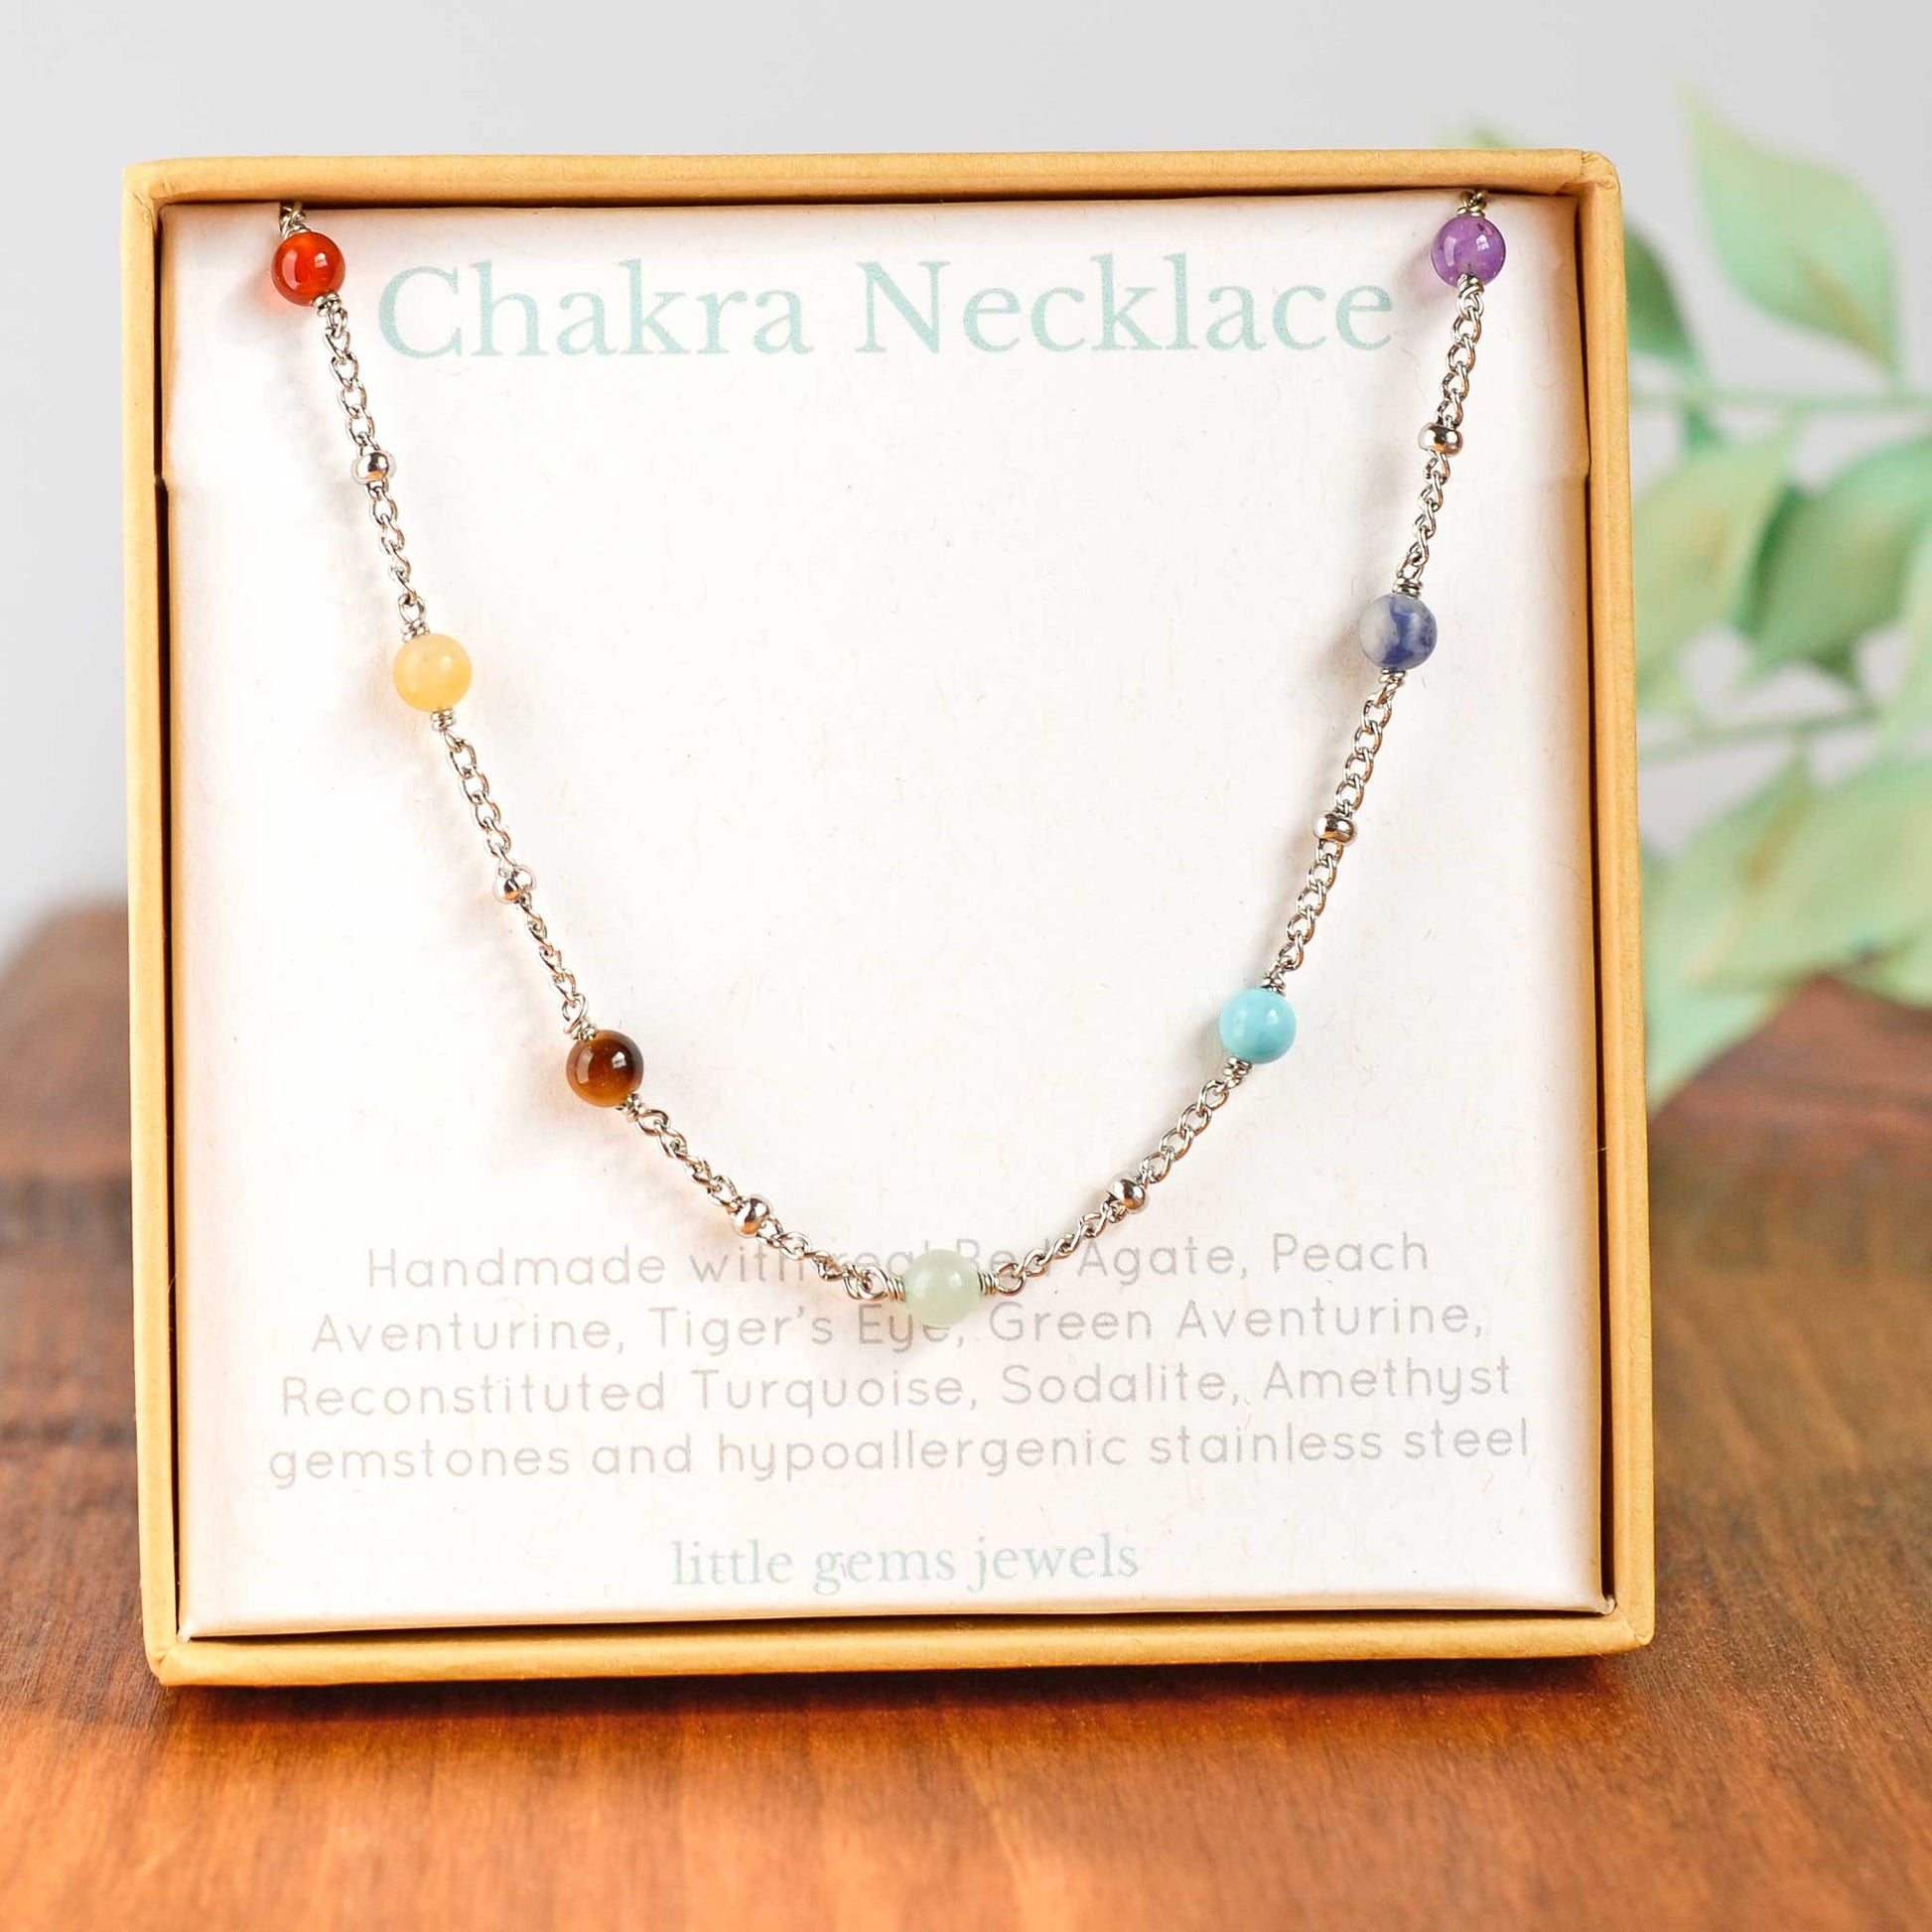 Chakra necklace inside eco friendly gift box